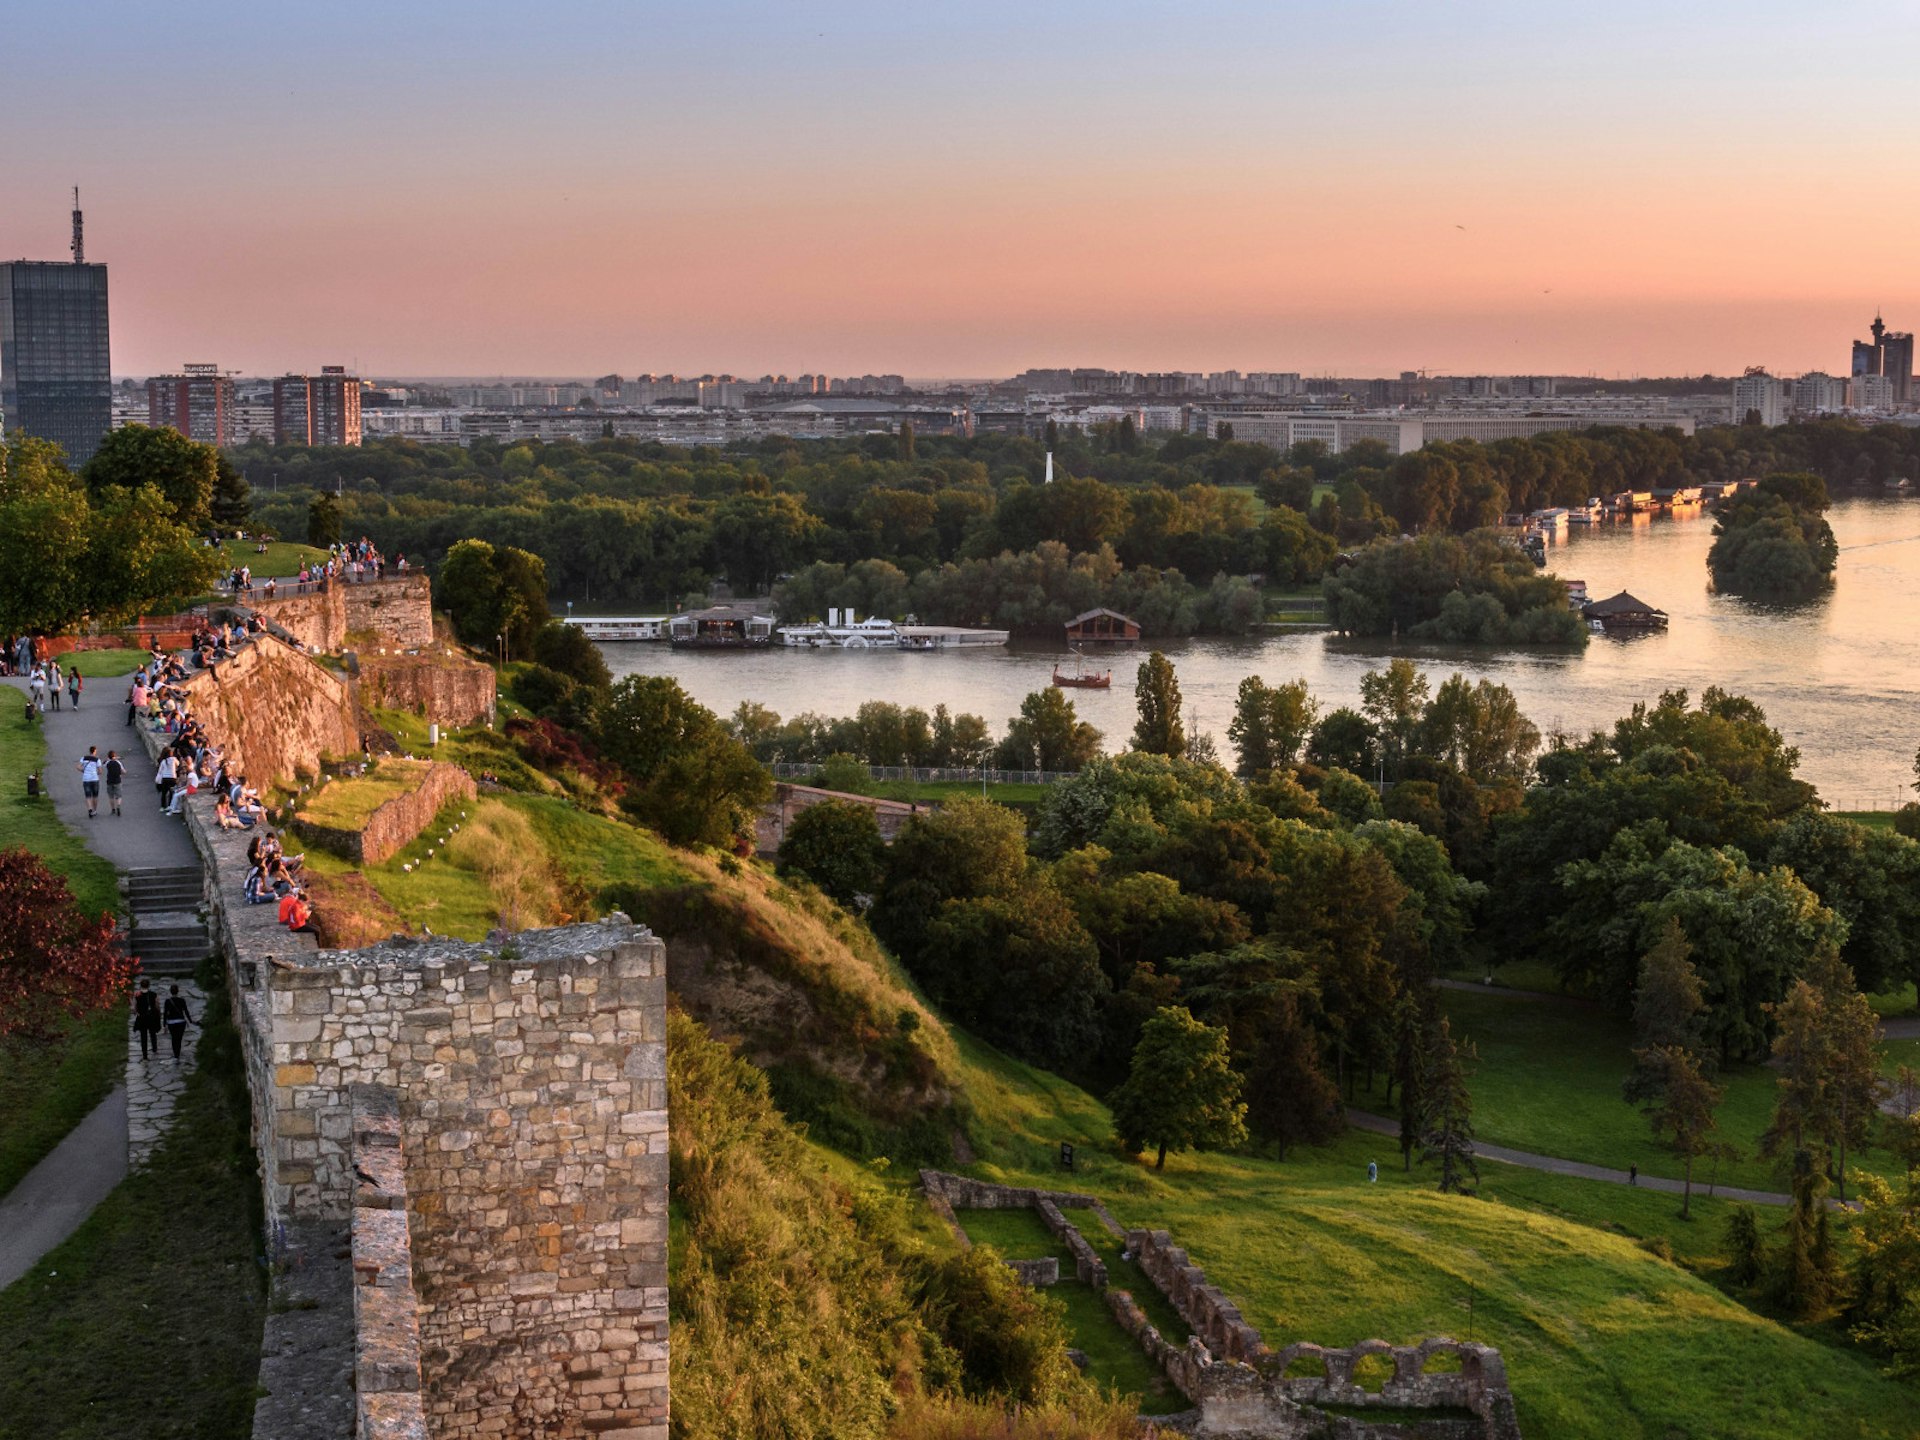 Evening walks on Kalemegdan Fortress above the Sava River © Makicom / Shutterstock